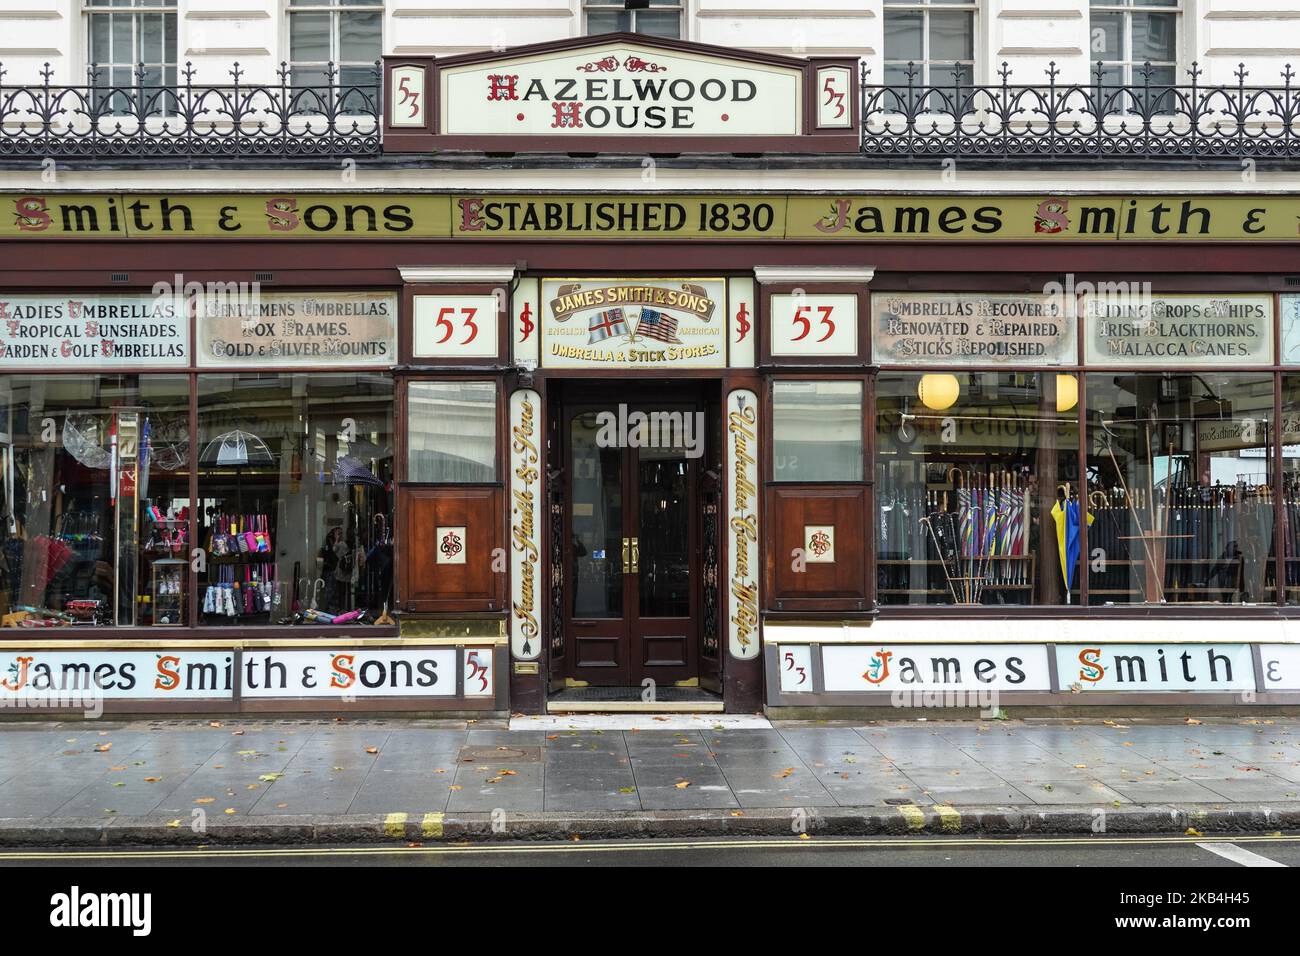 James Smith & Sons umbrella shop in Hazelwood House, New Oxford Street, London England United Kingdom UK Stock Photo